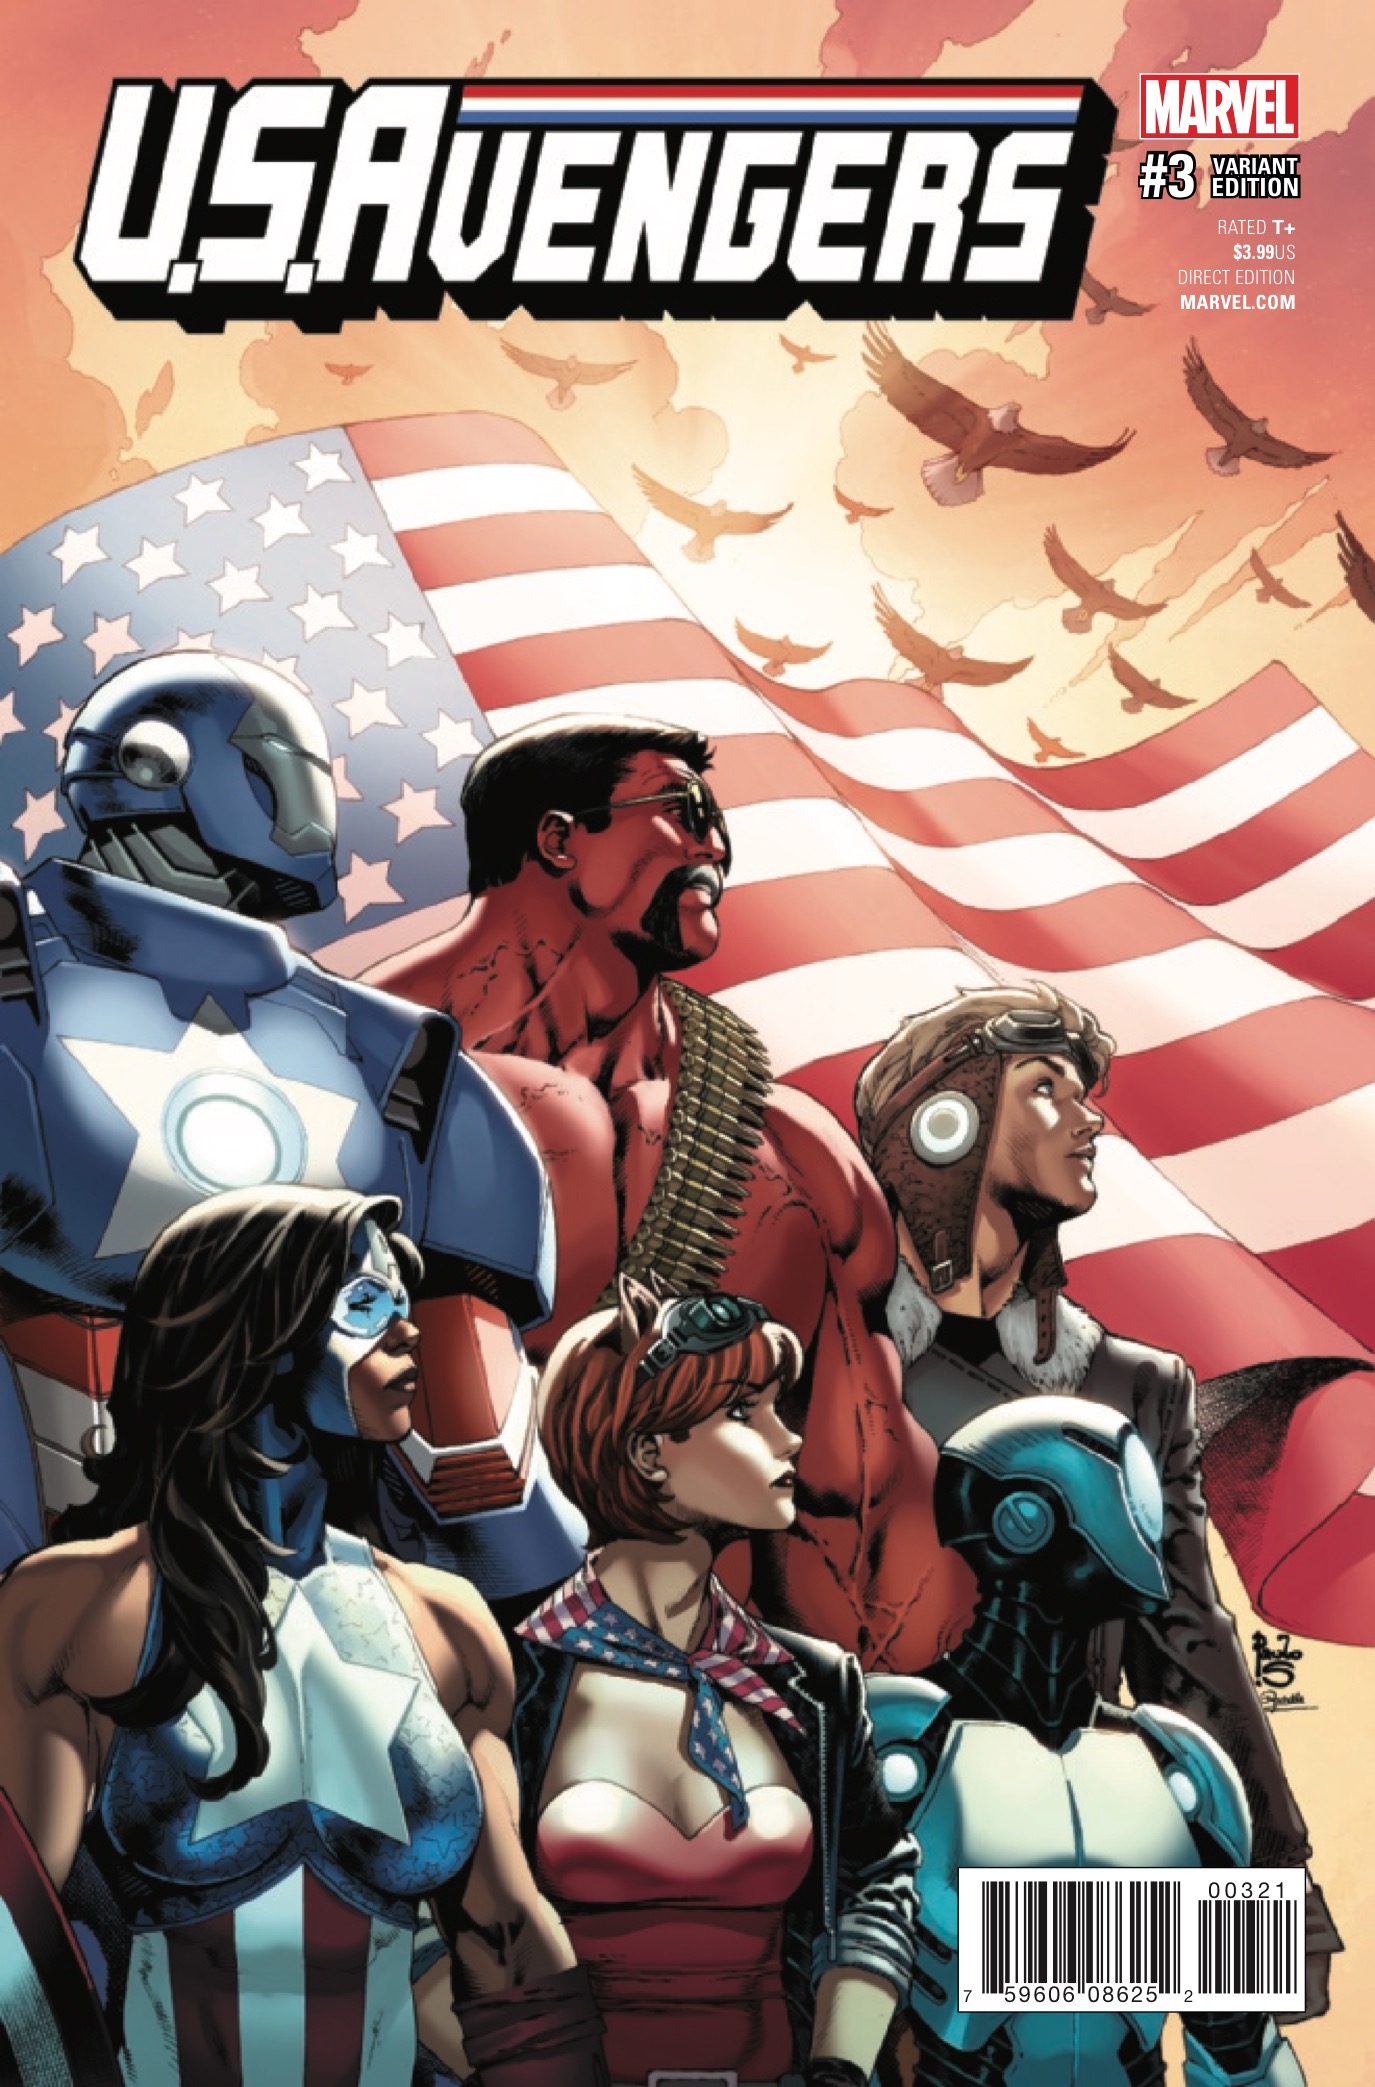 Marvel Preview: U.S.Avengers #3